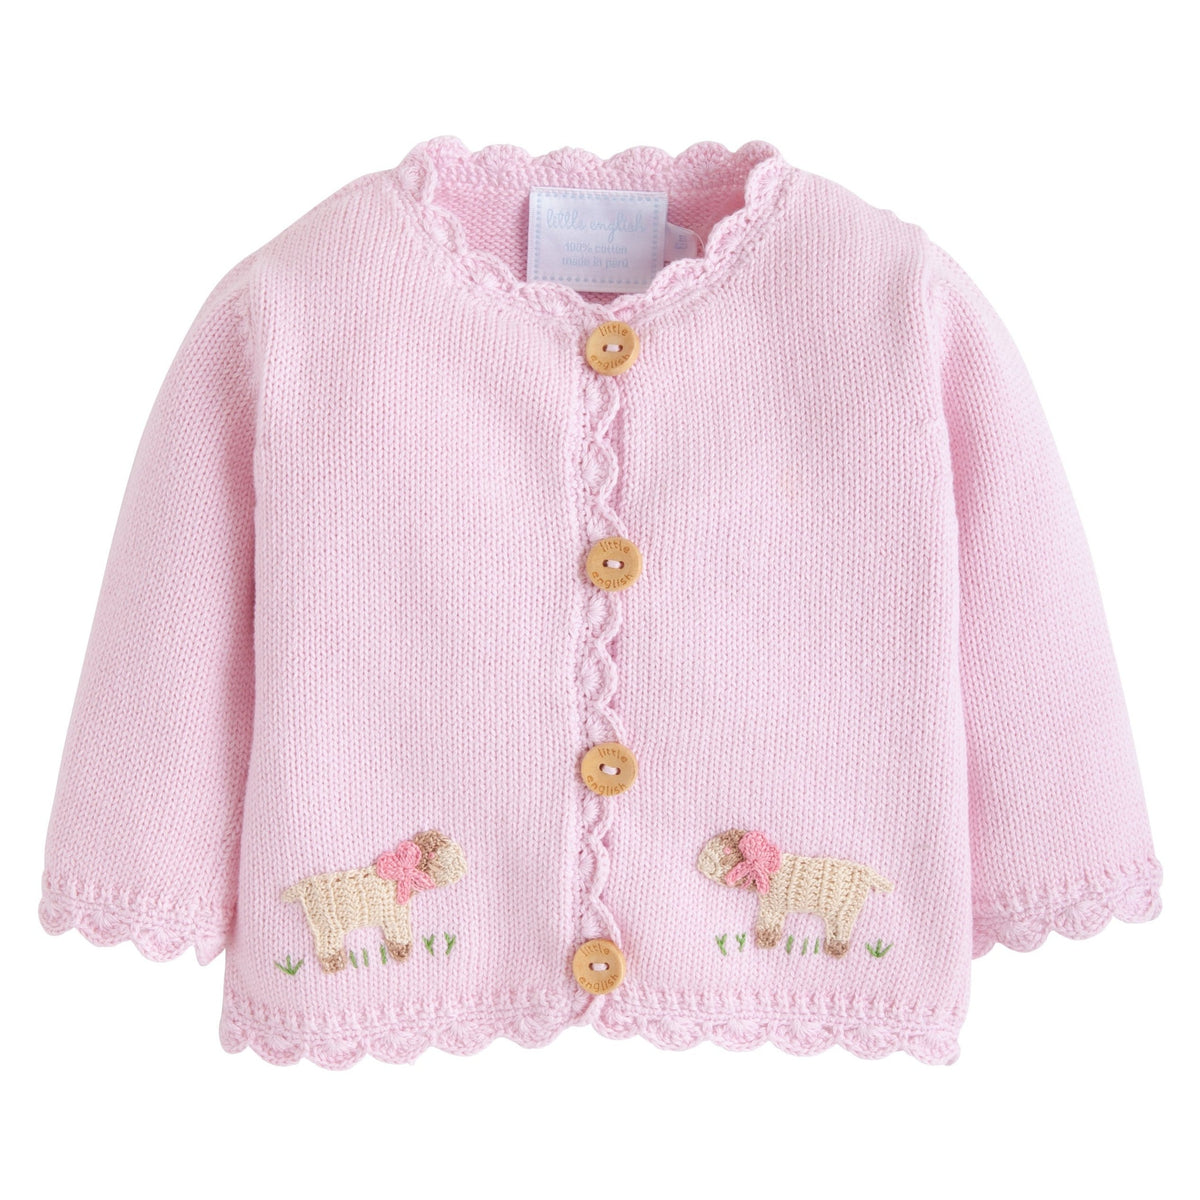 seguridadindustrialcr signature crochet sweater for baby girl, traditional pink sheep crochet sweater for baby girl